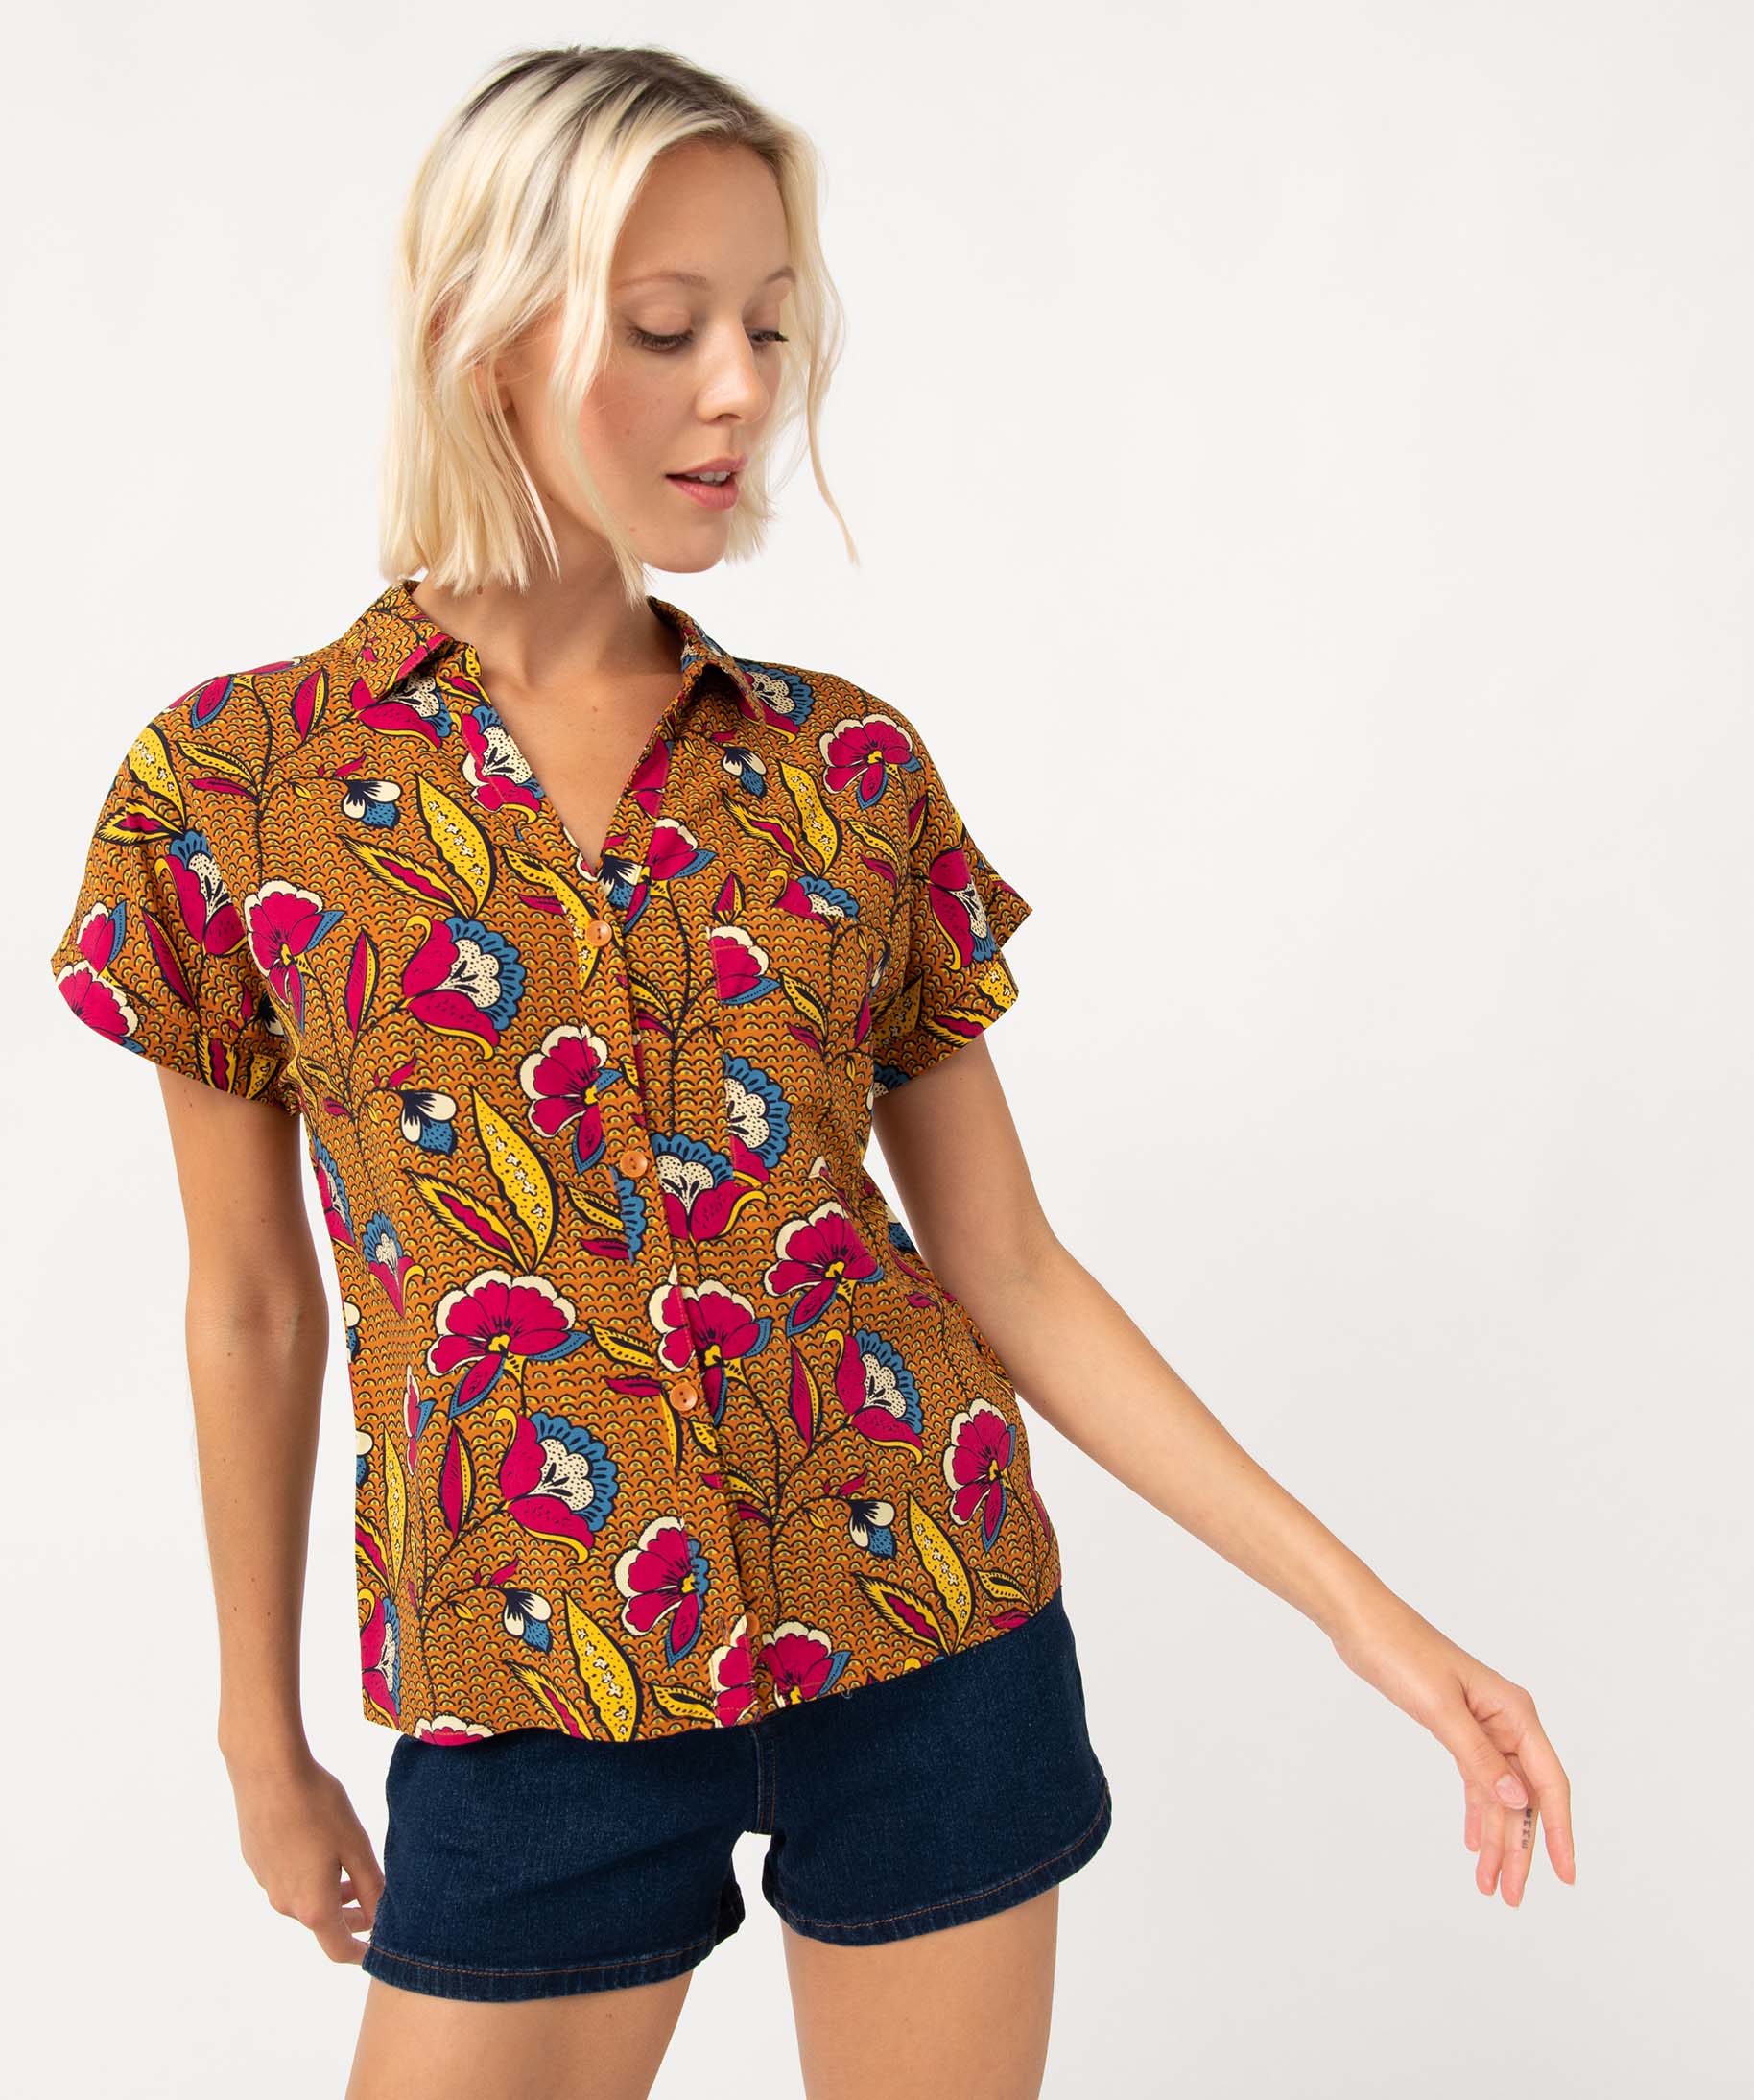 chemise femme imprimee a manches courtes multicolore chemisiers